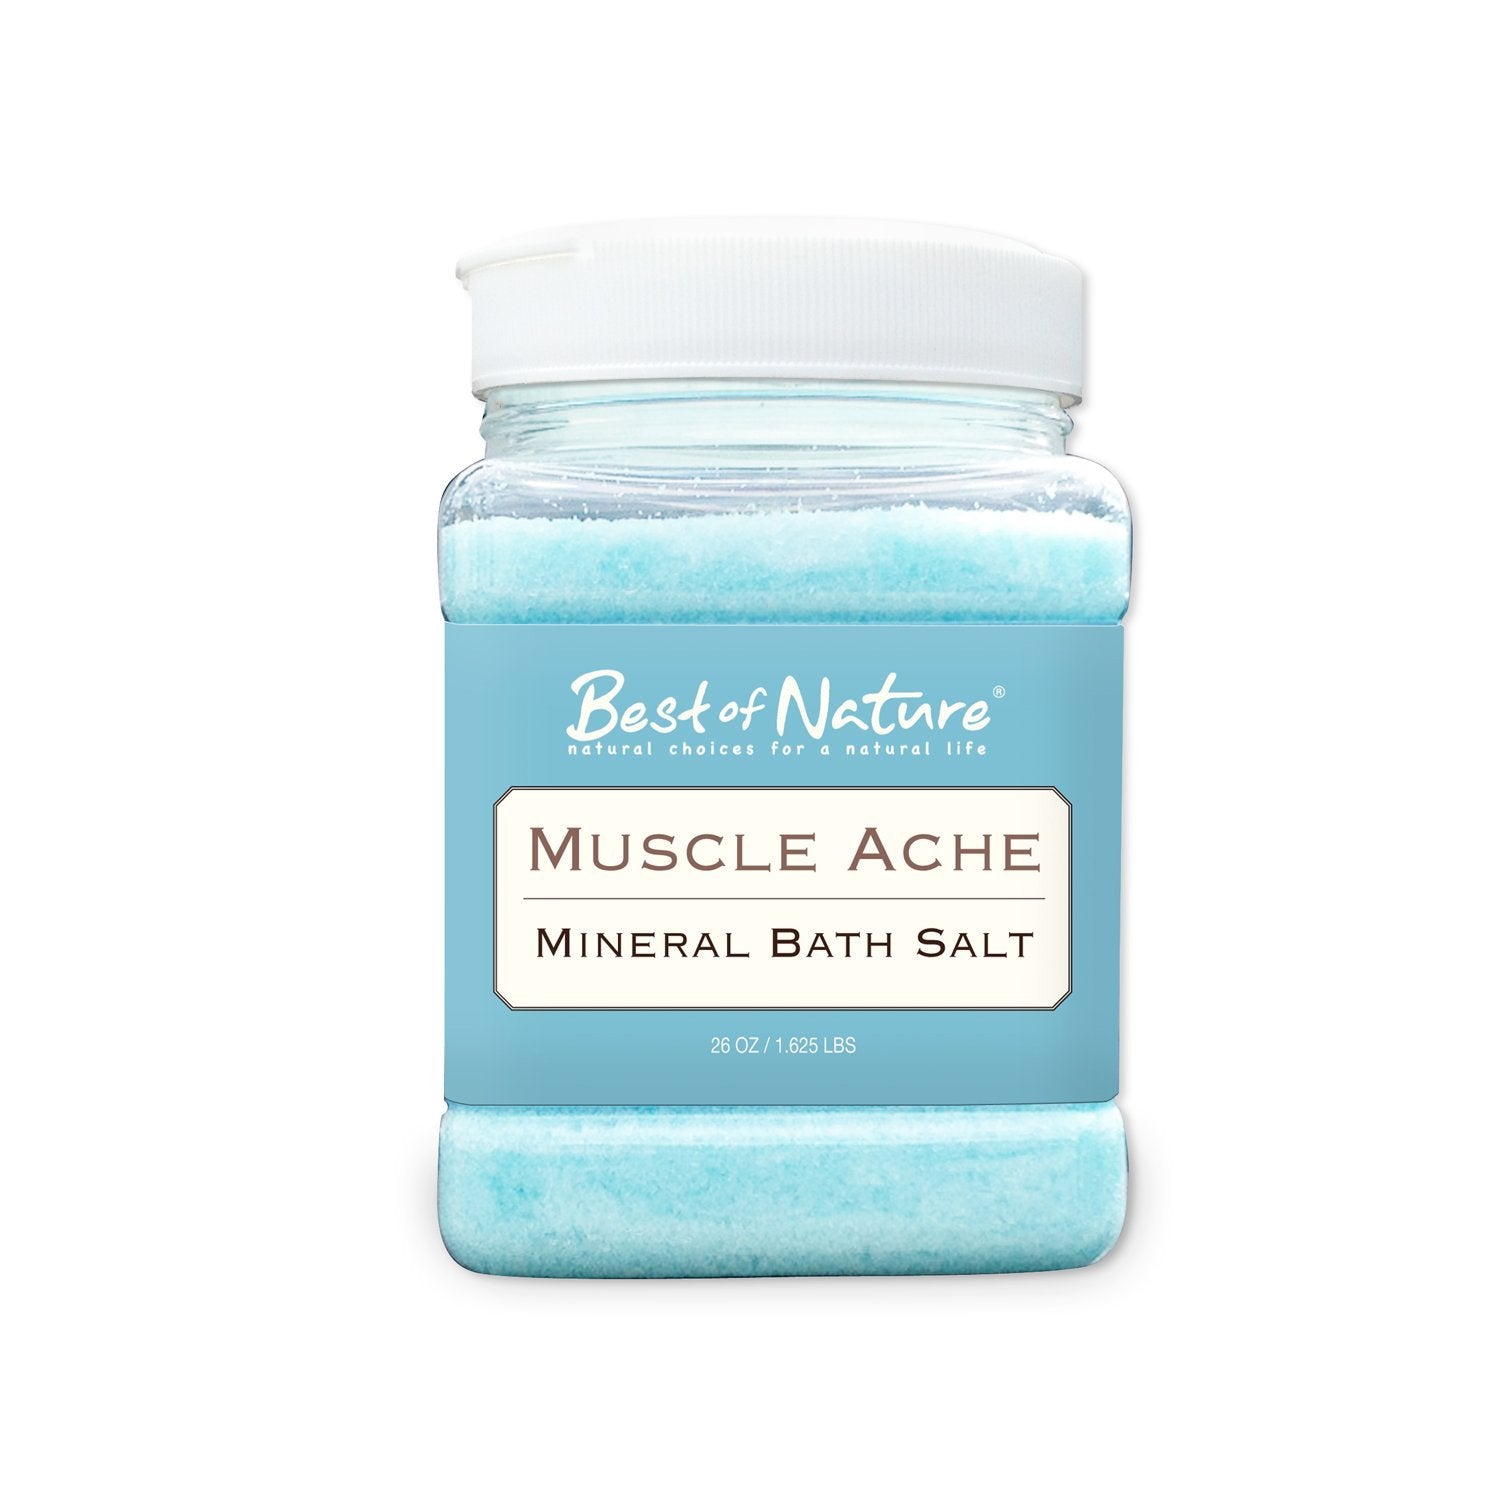 Muscle Ache Mineral Bath Salt